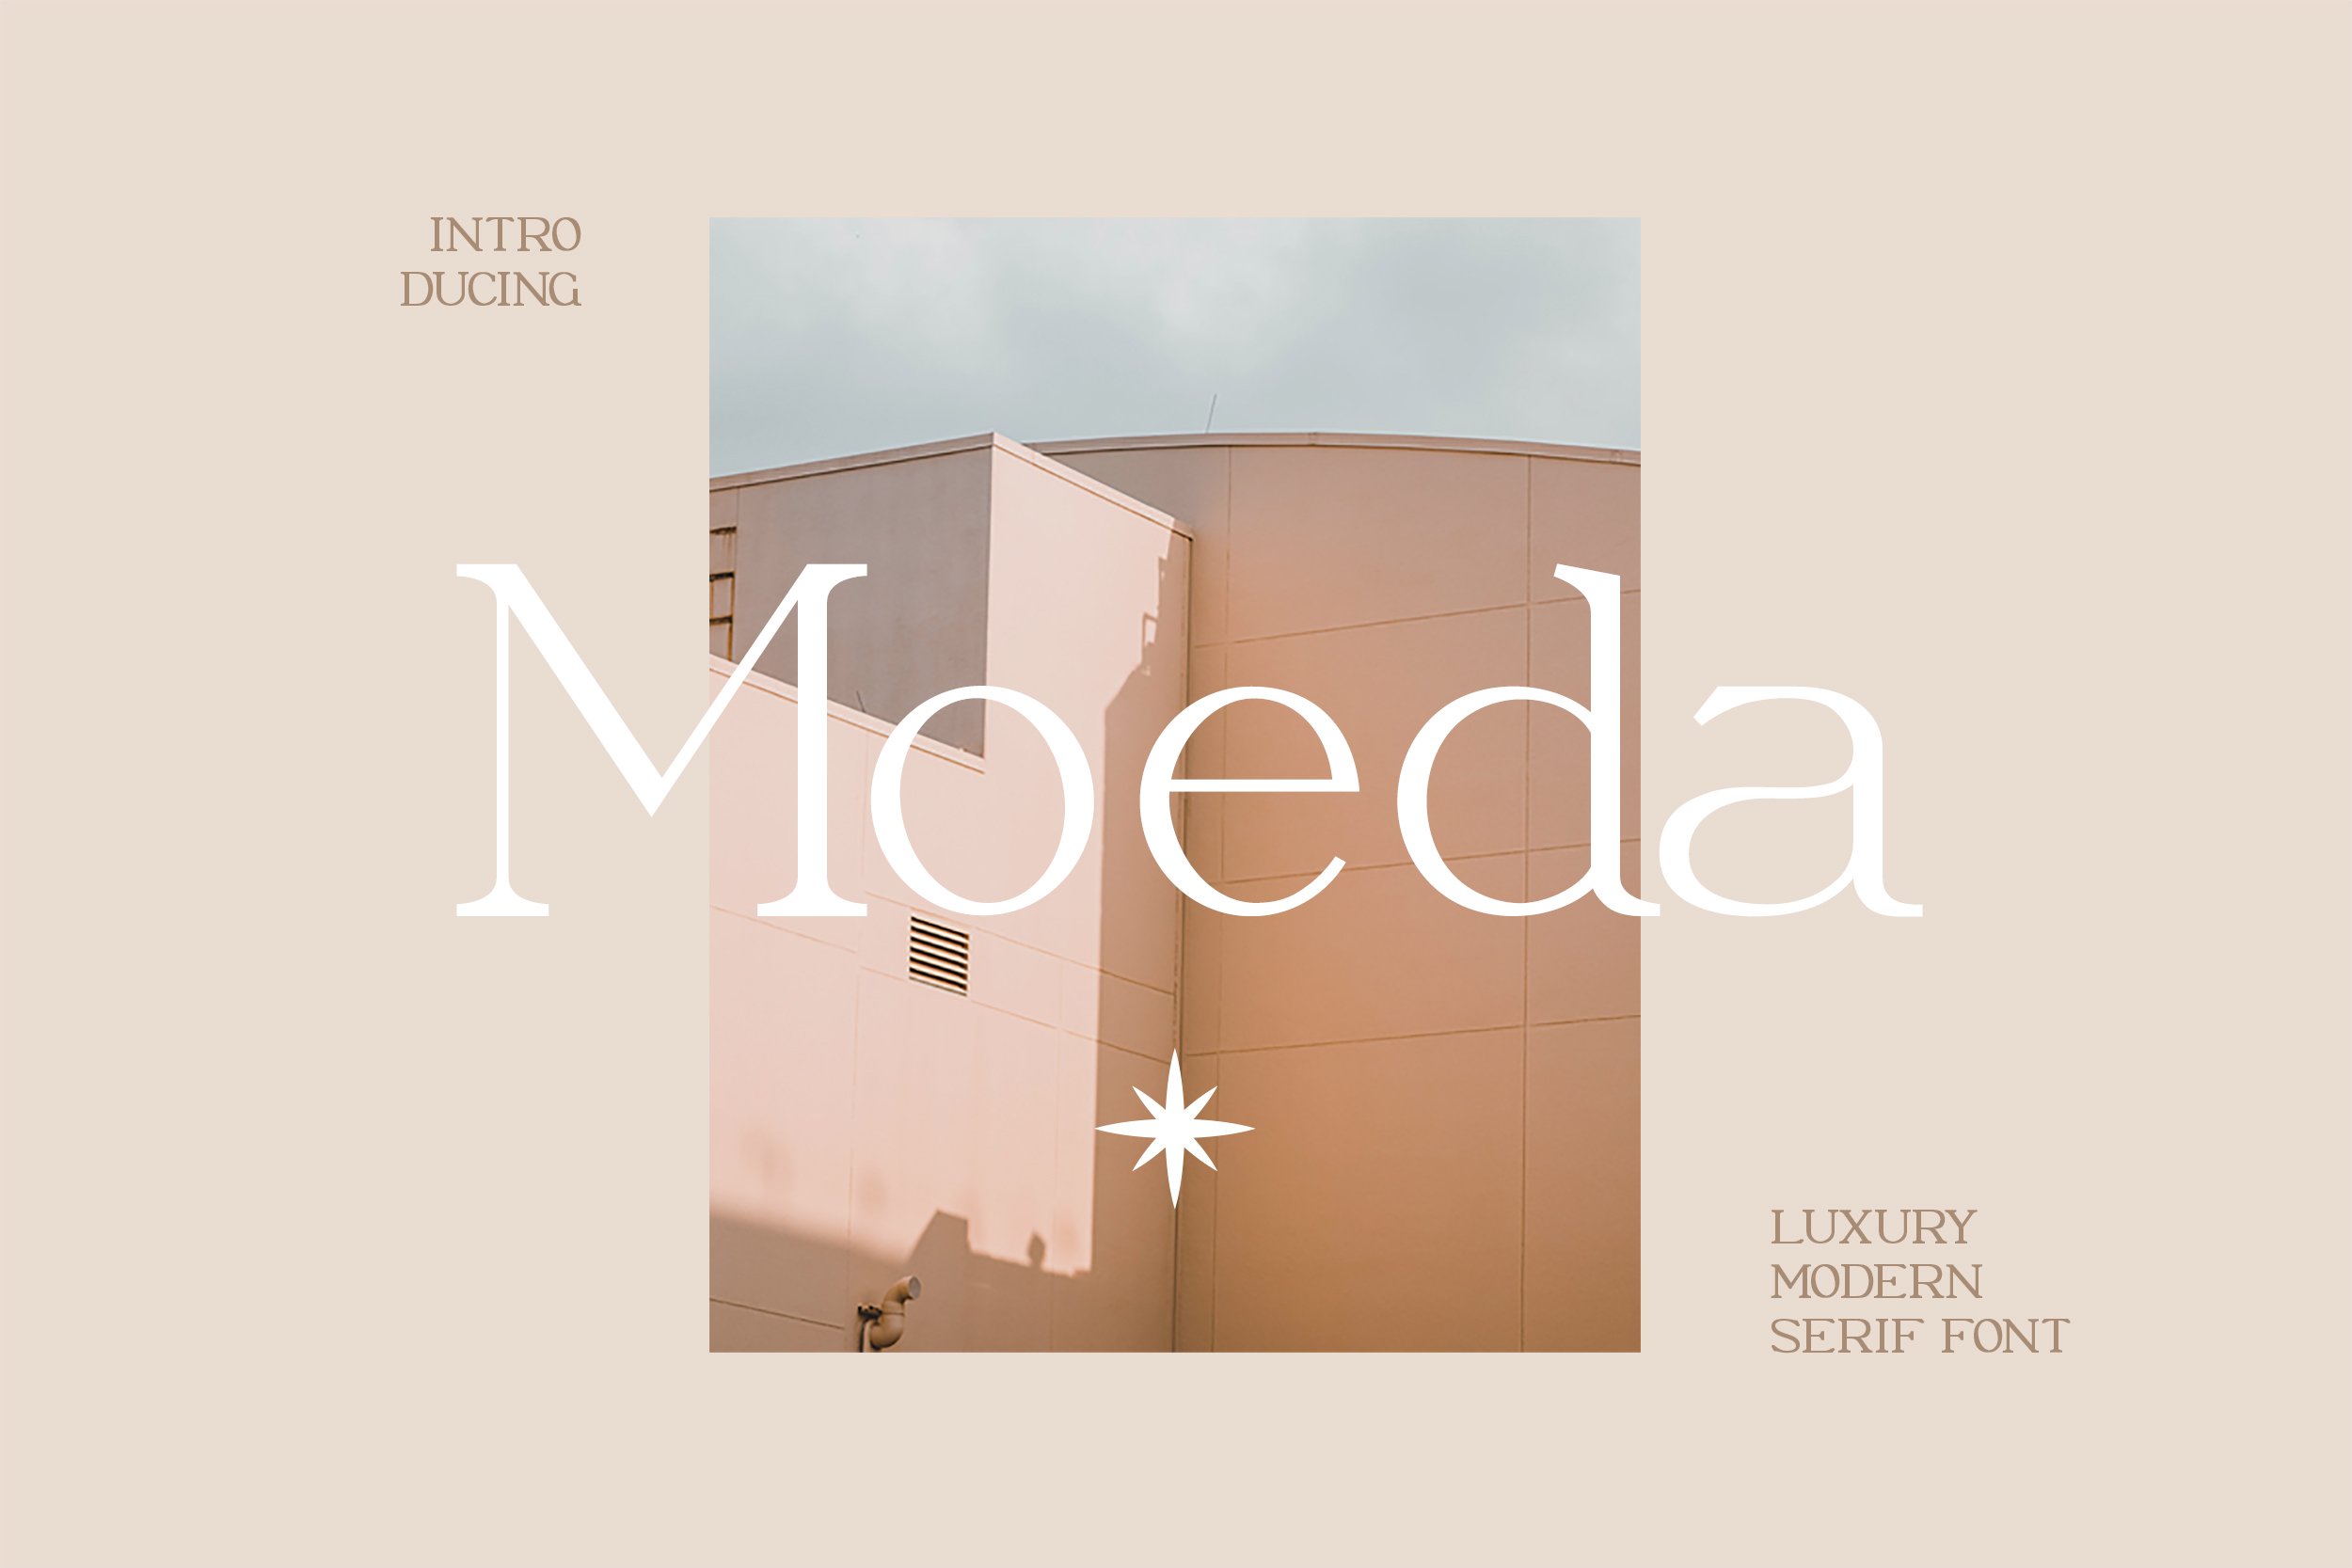 Moeda Luxury Serif Font cover image.